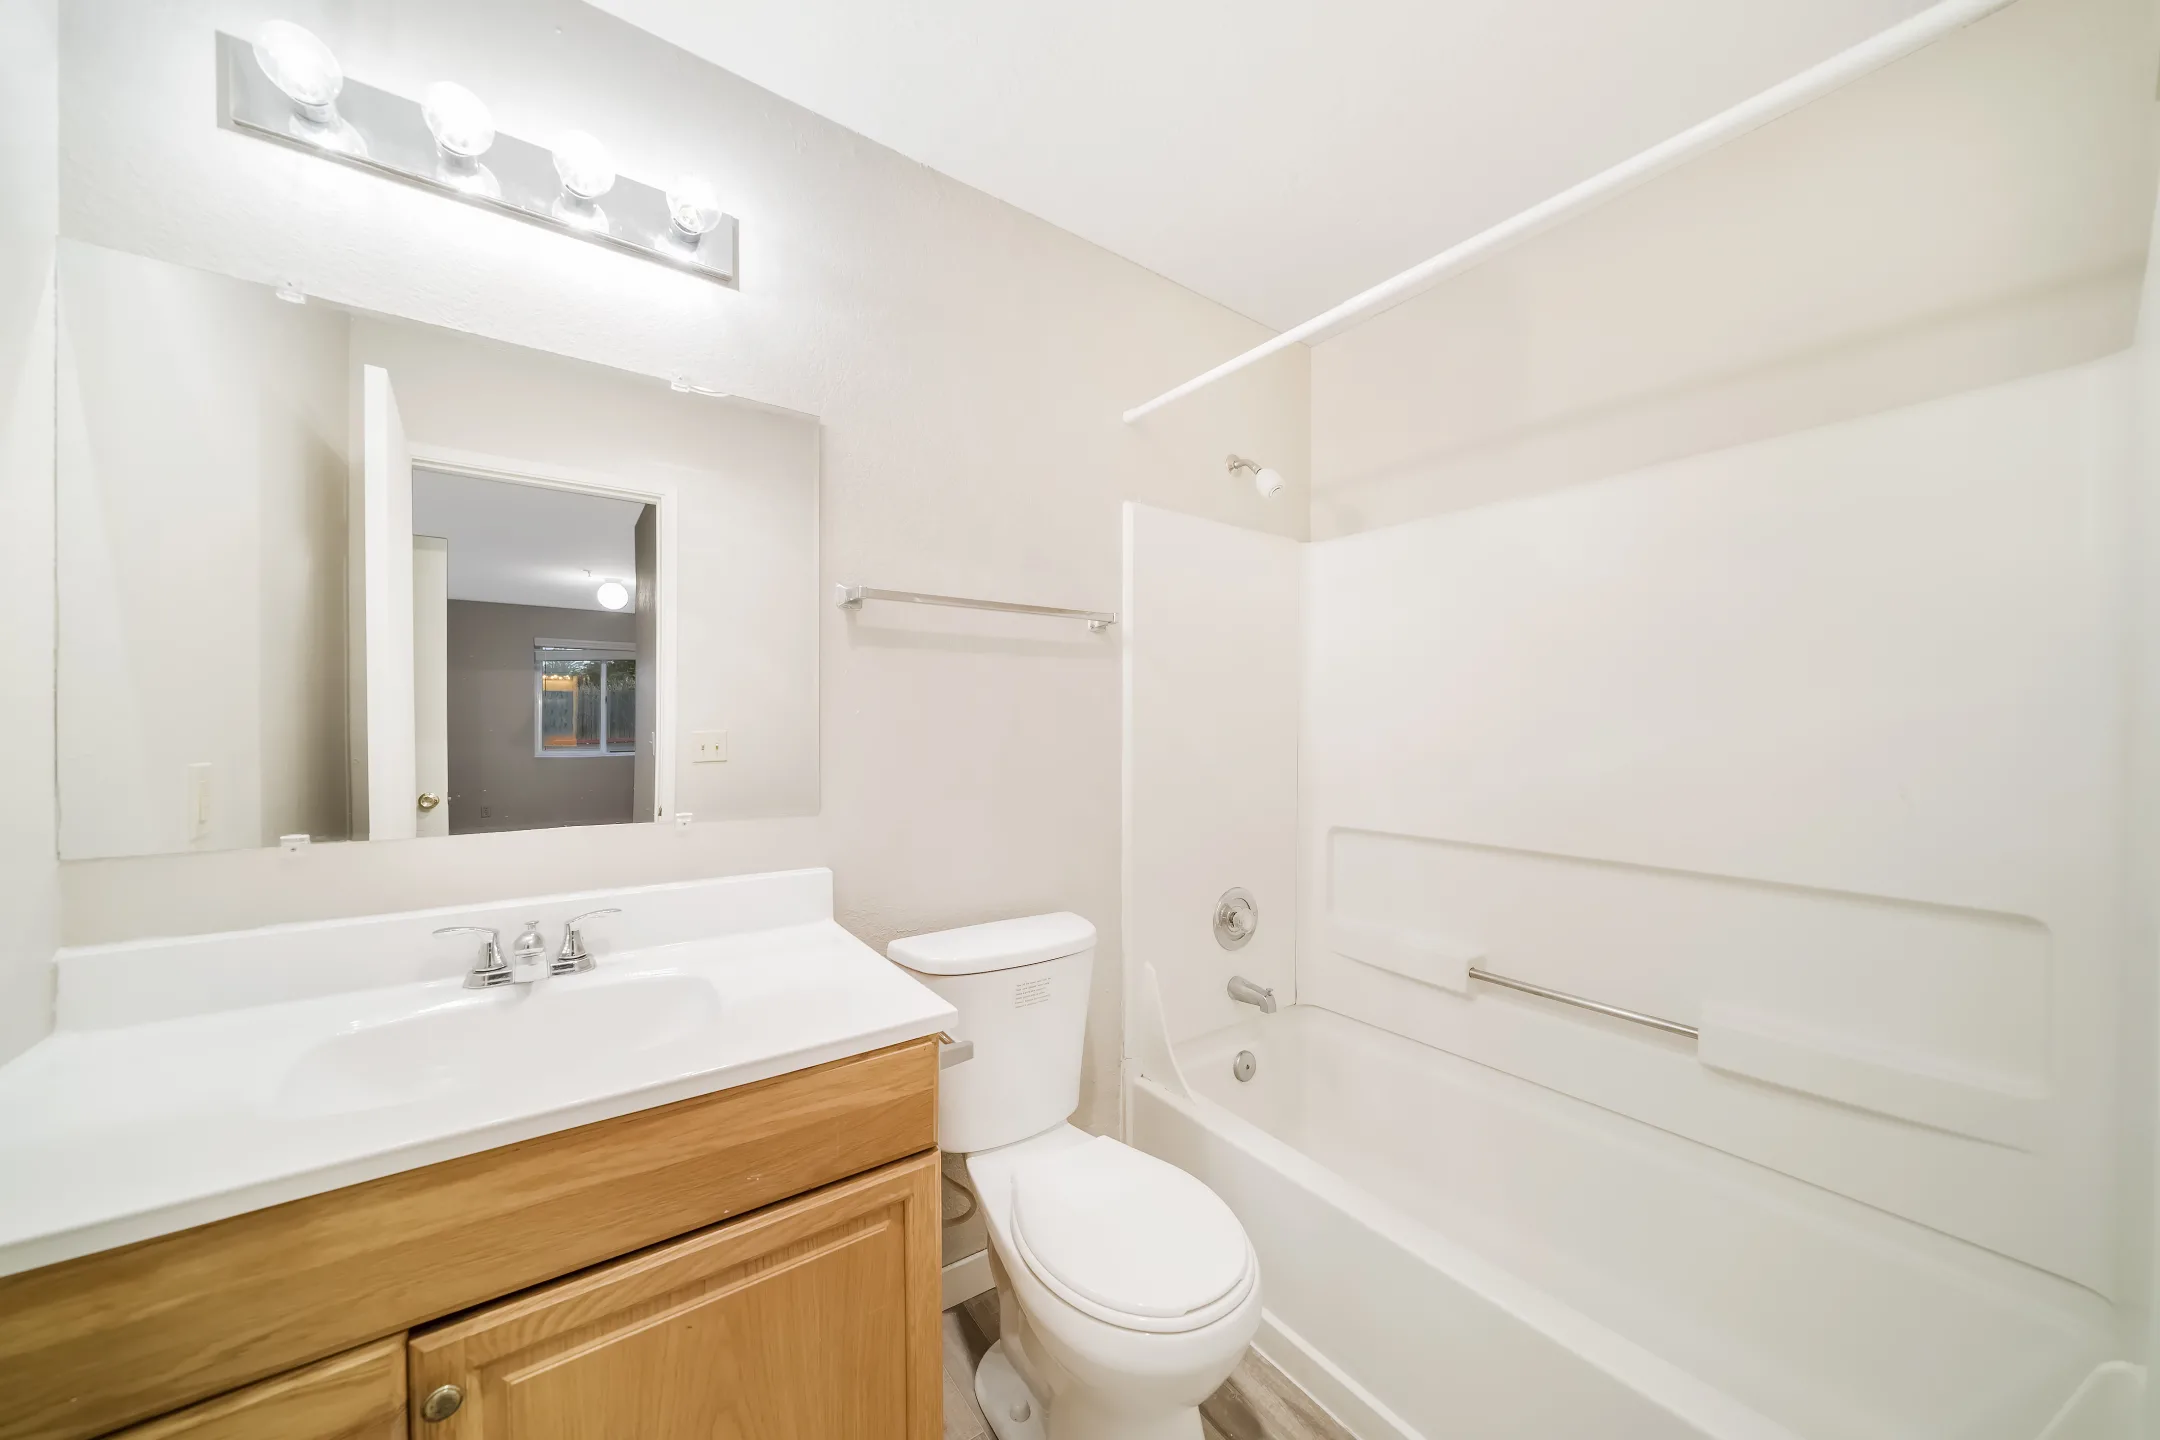 Bathroom - Samish Bay Flats - Mount Vernon, WA